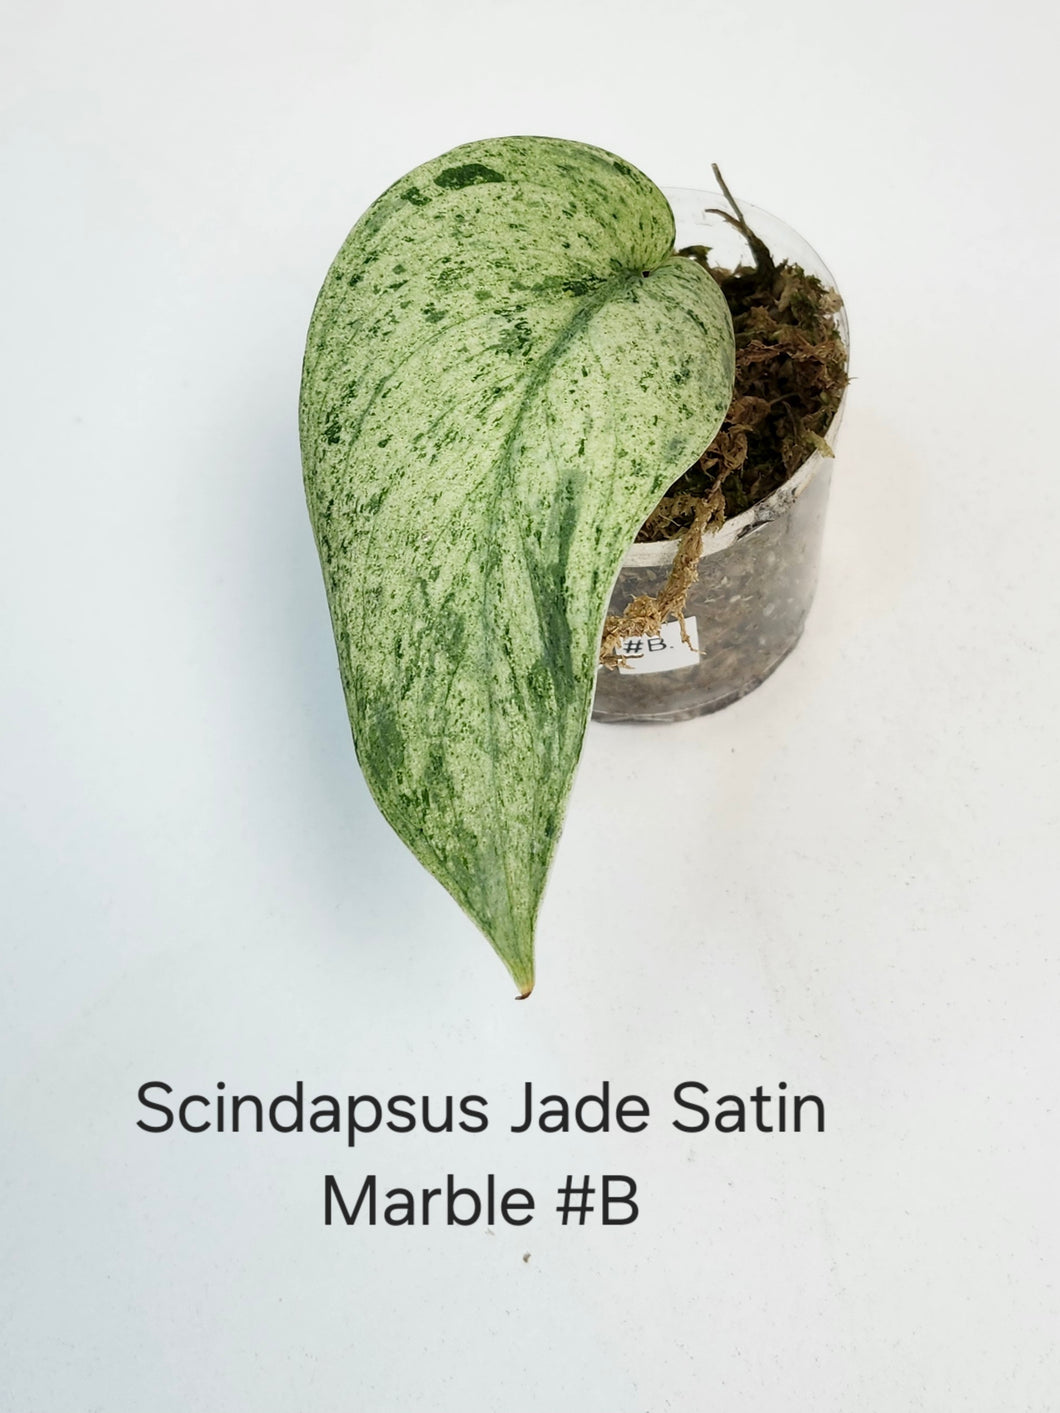 Scindapsus jade satin marble #B